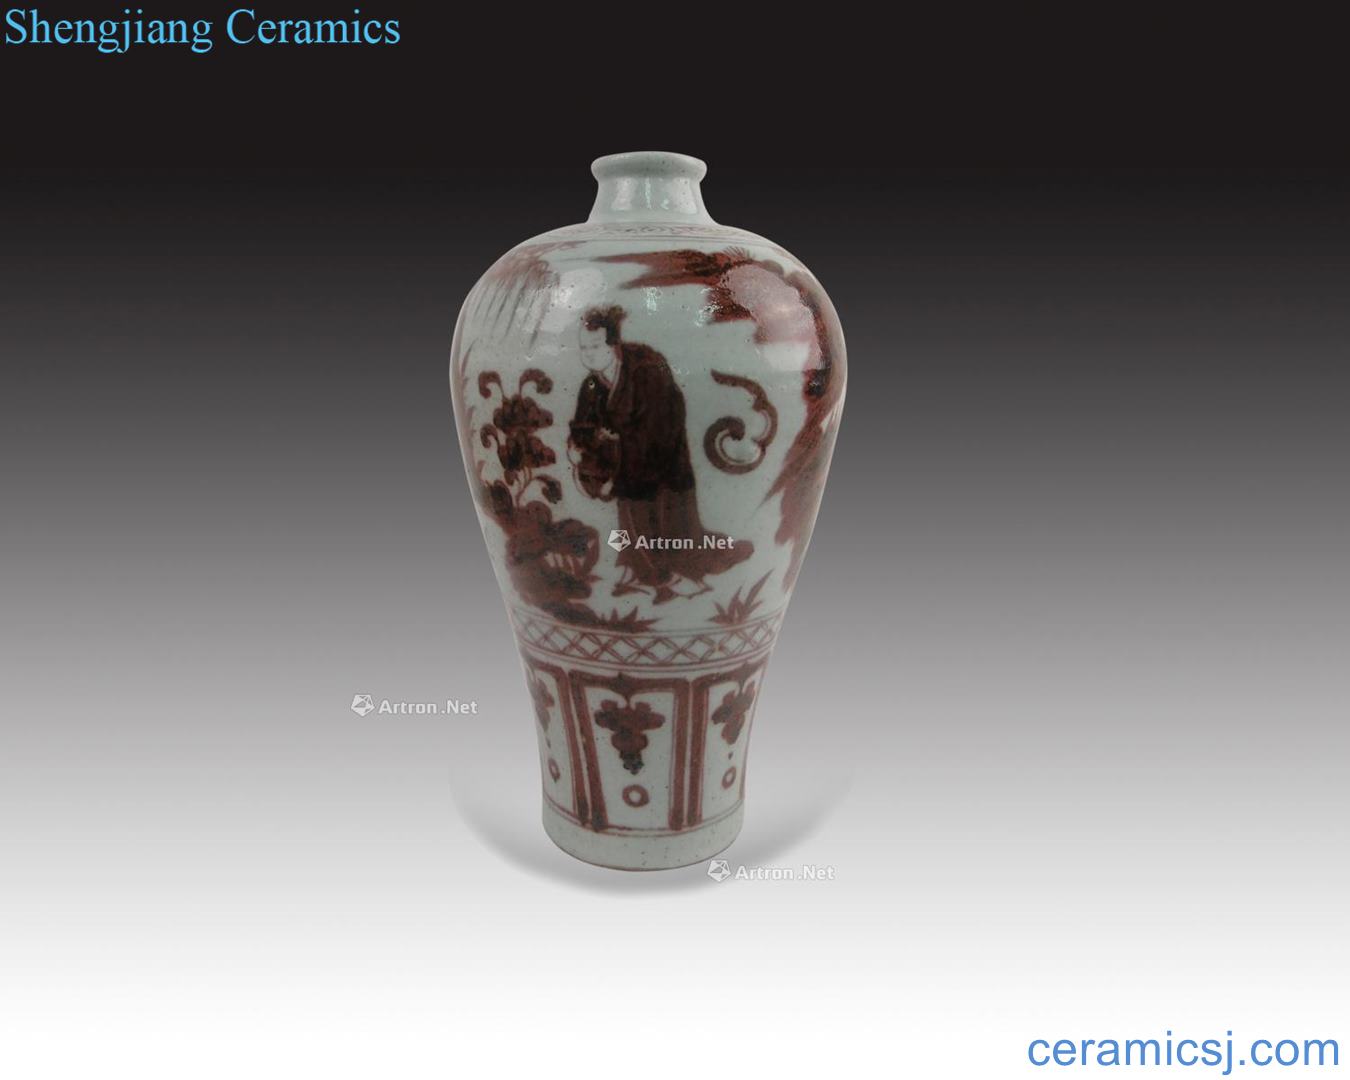 In the Ming dynasty hongwu Youligong hong mei bottle